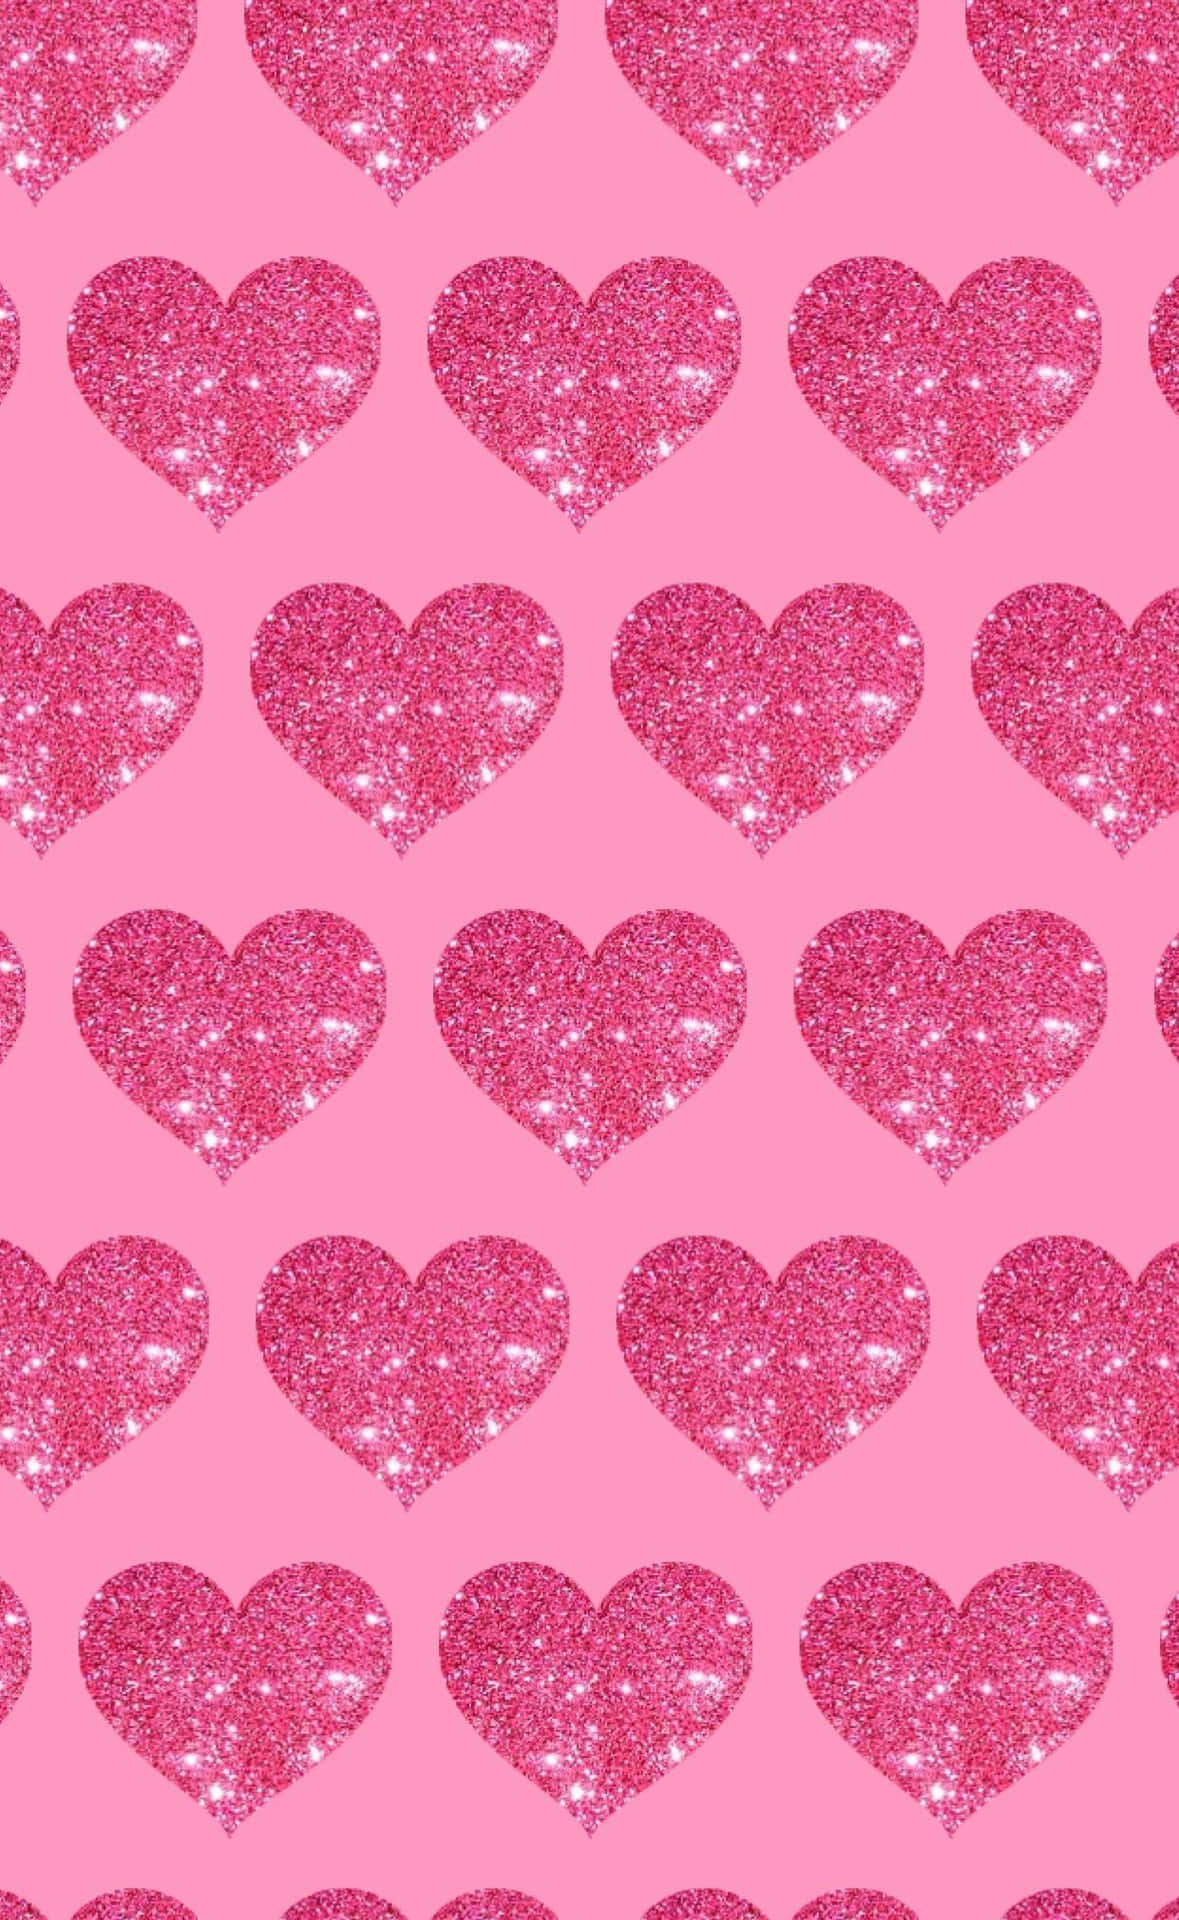 Glittery Pink Hearts Pattern Wallpaper